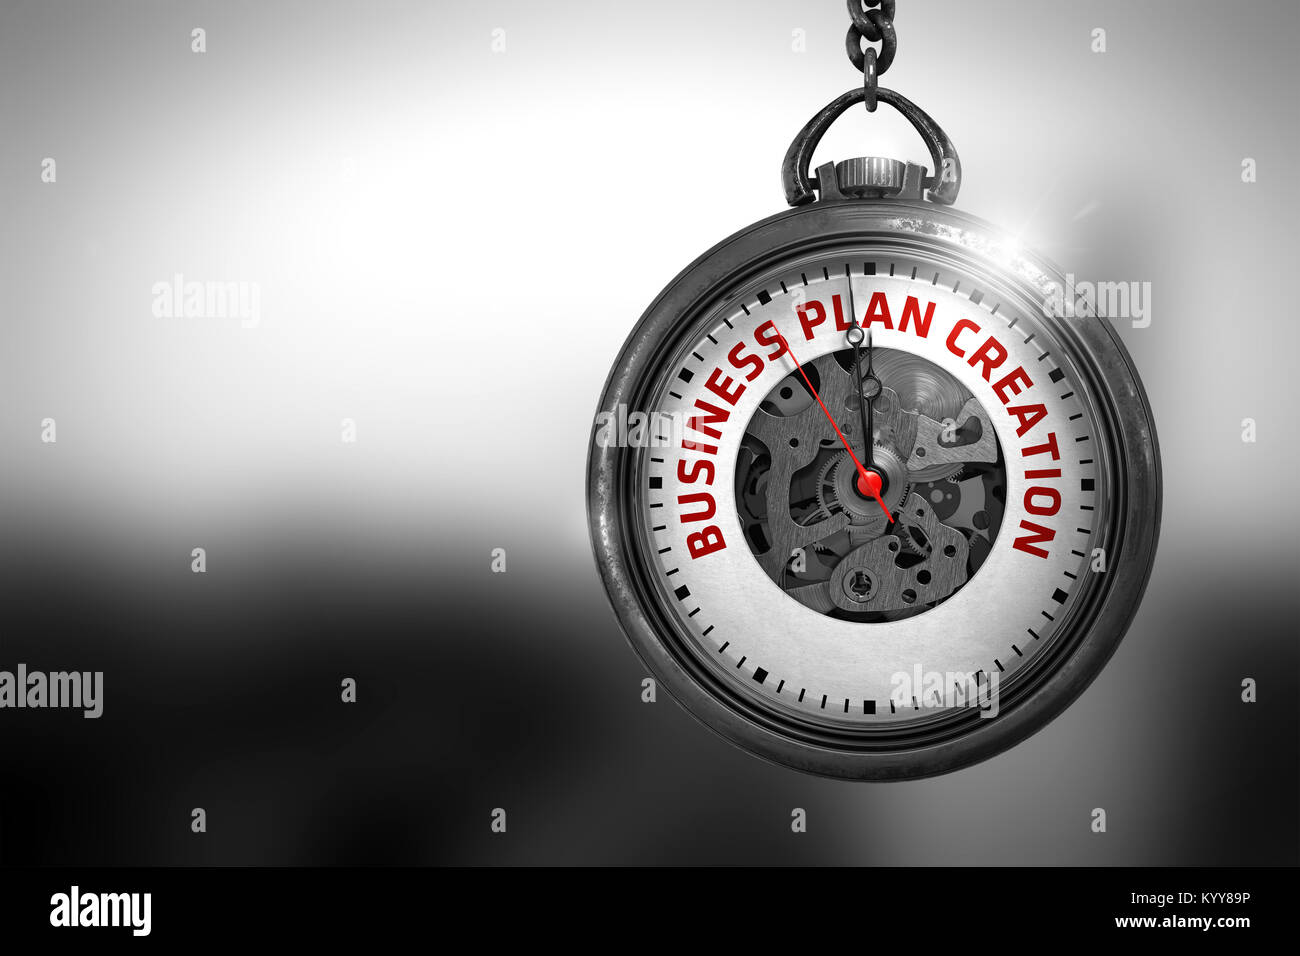 Business Plan Creation on Pocket Watch. 3D Illustration. Stock Photo